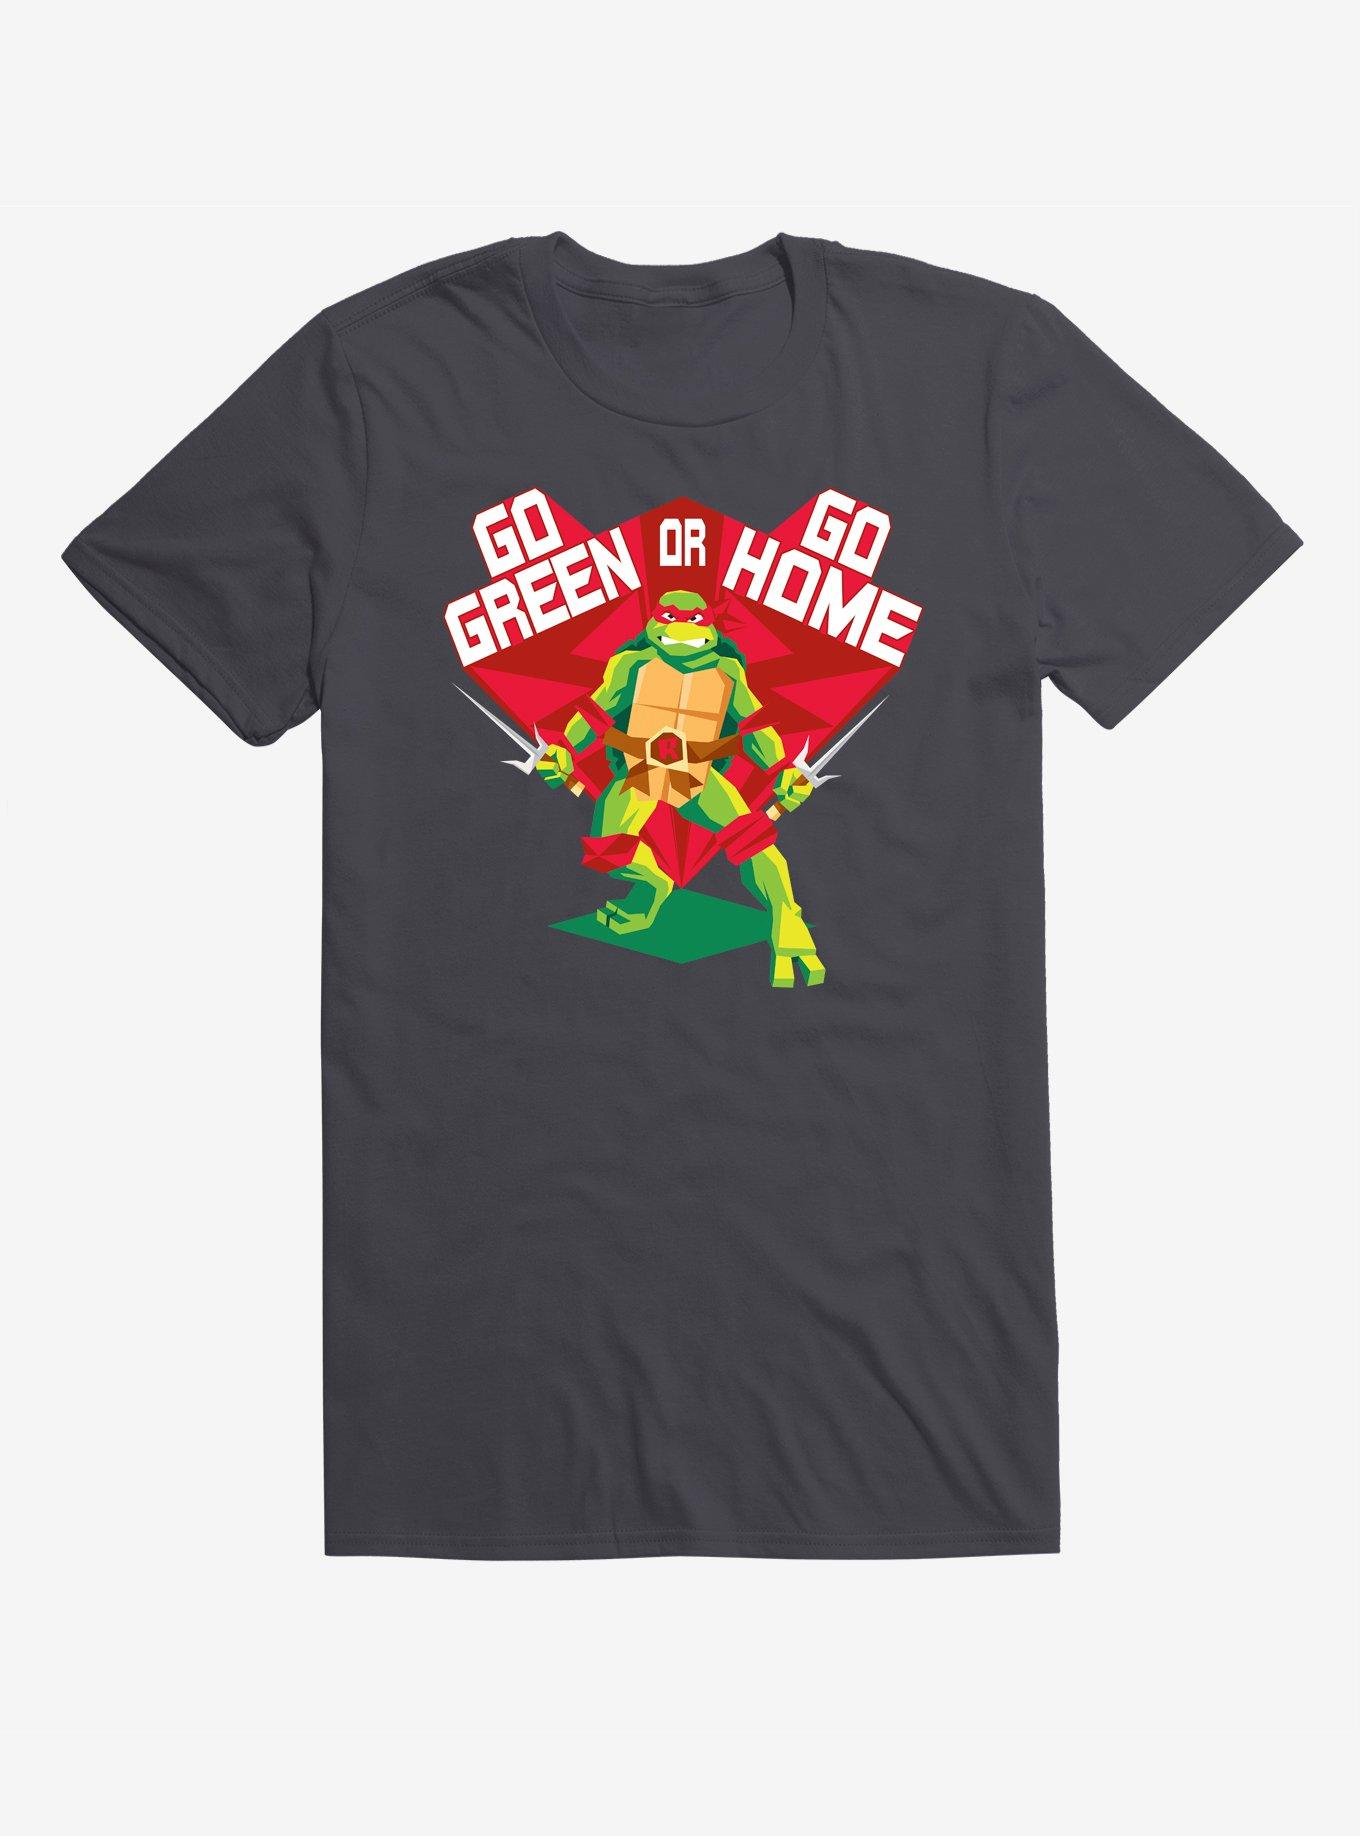 Teenage Mutant Ninja Turtles Go Green or Home T-Shirt